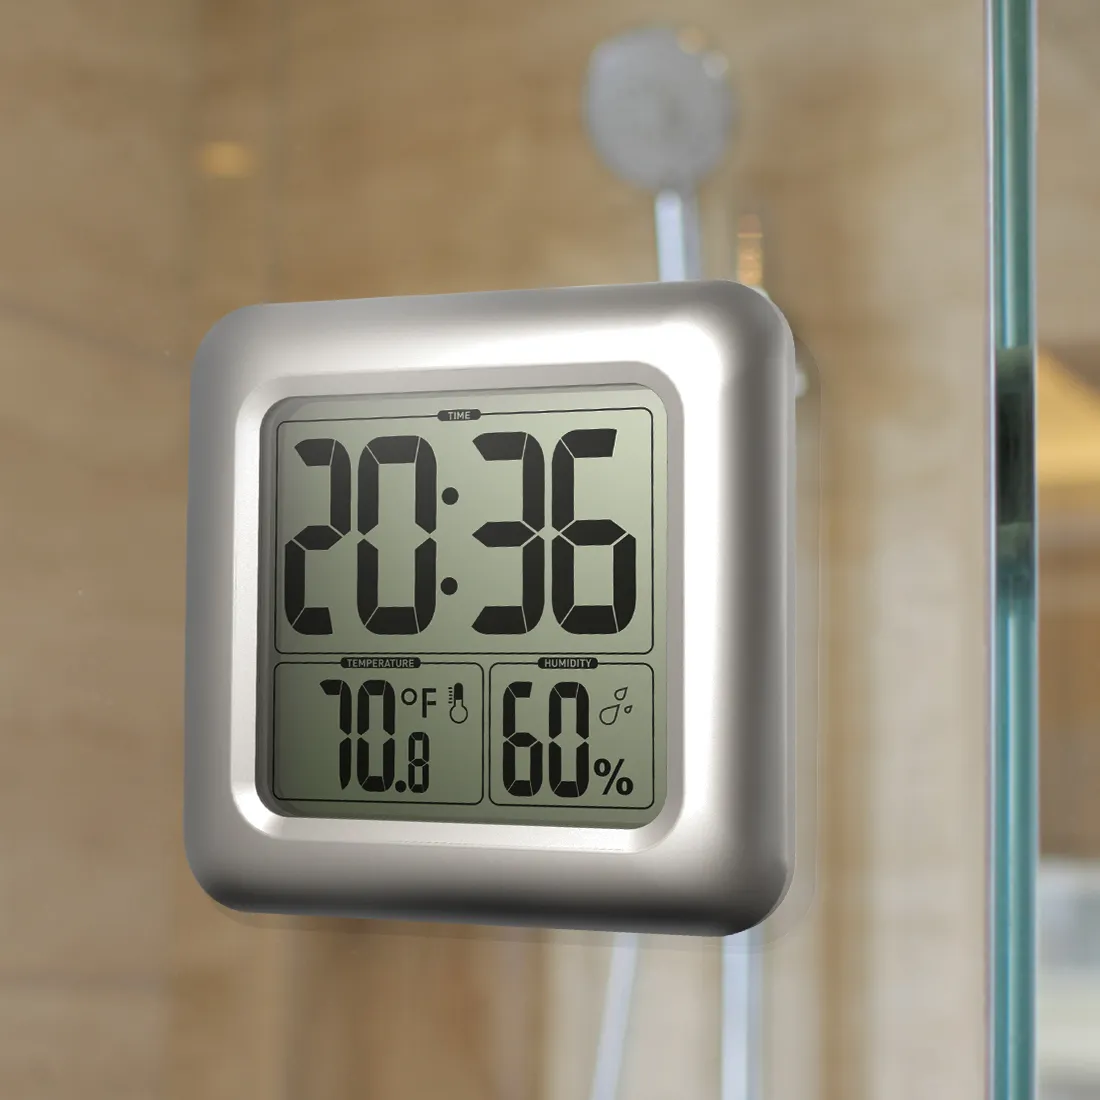 Compre Baldr Reloj De Baño Digital Reloj De Ducha A Prueba De Agua Ventosas  Temporizador De Alarma y Cocina Temporizador Reloj Despertador Reloj De  Pared de China por 6.37 USD